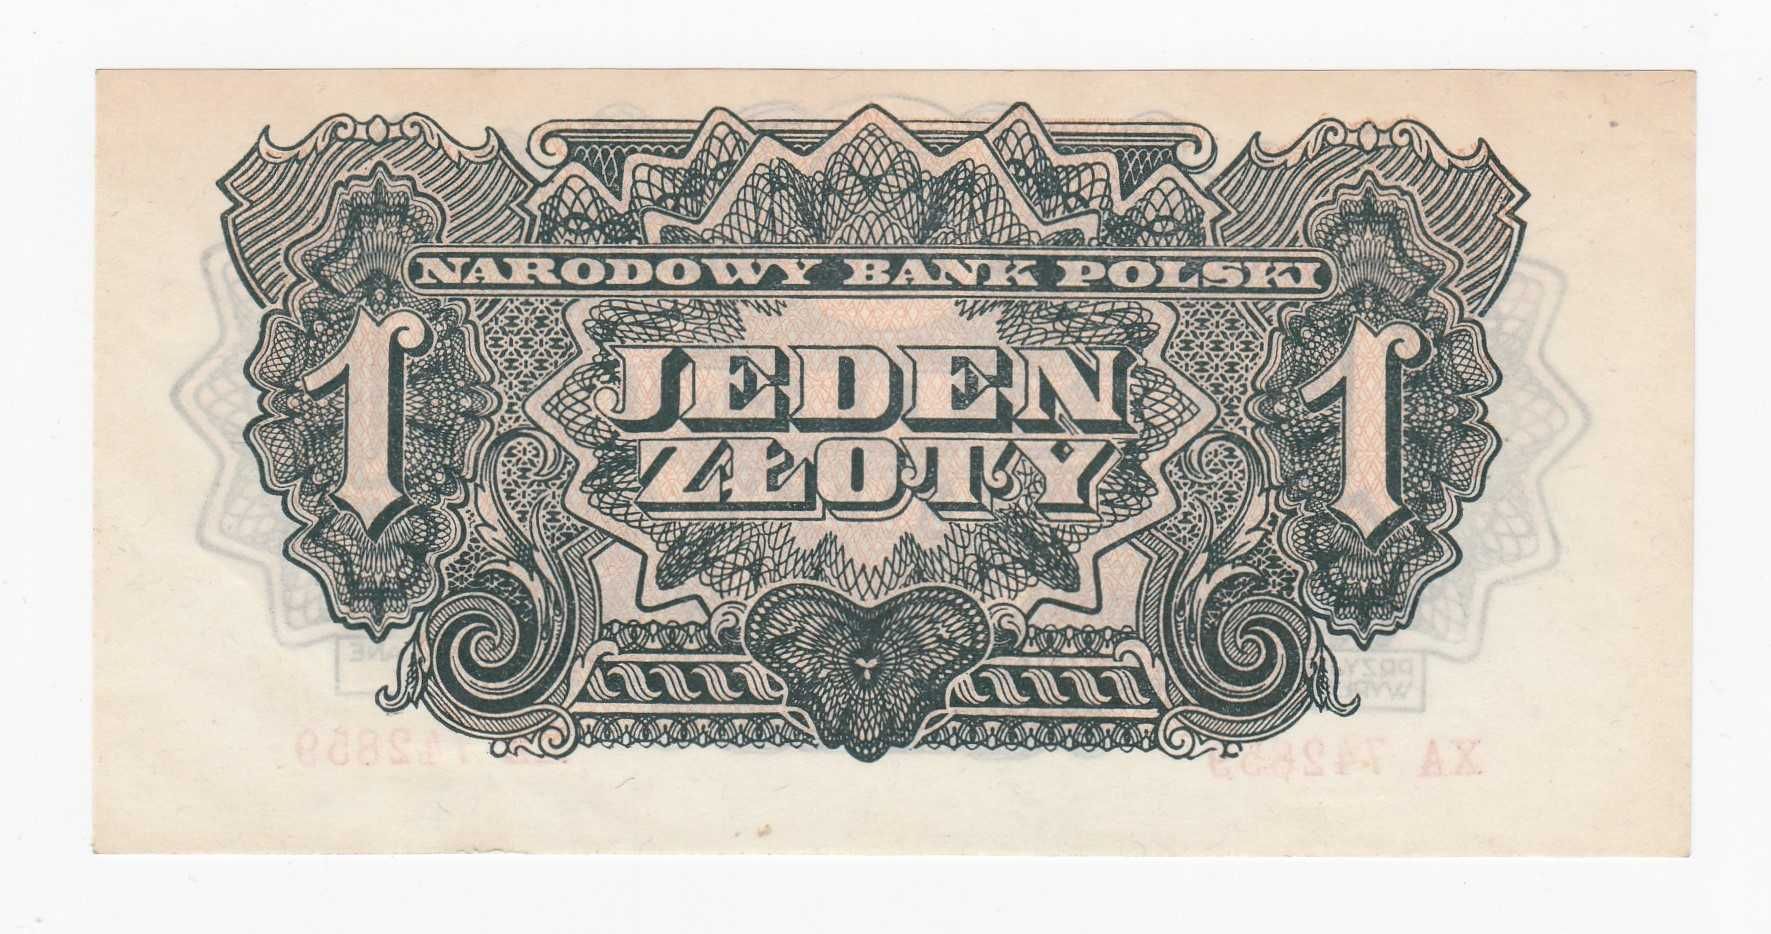 Banknot 1 zł 1944, seria XA, (owym), UNC/UNC-